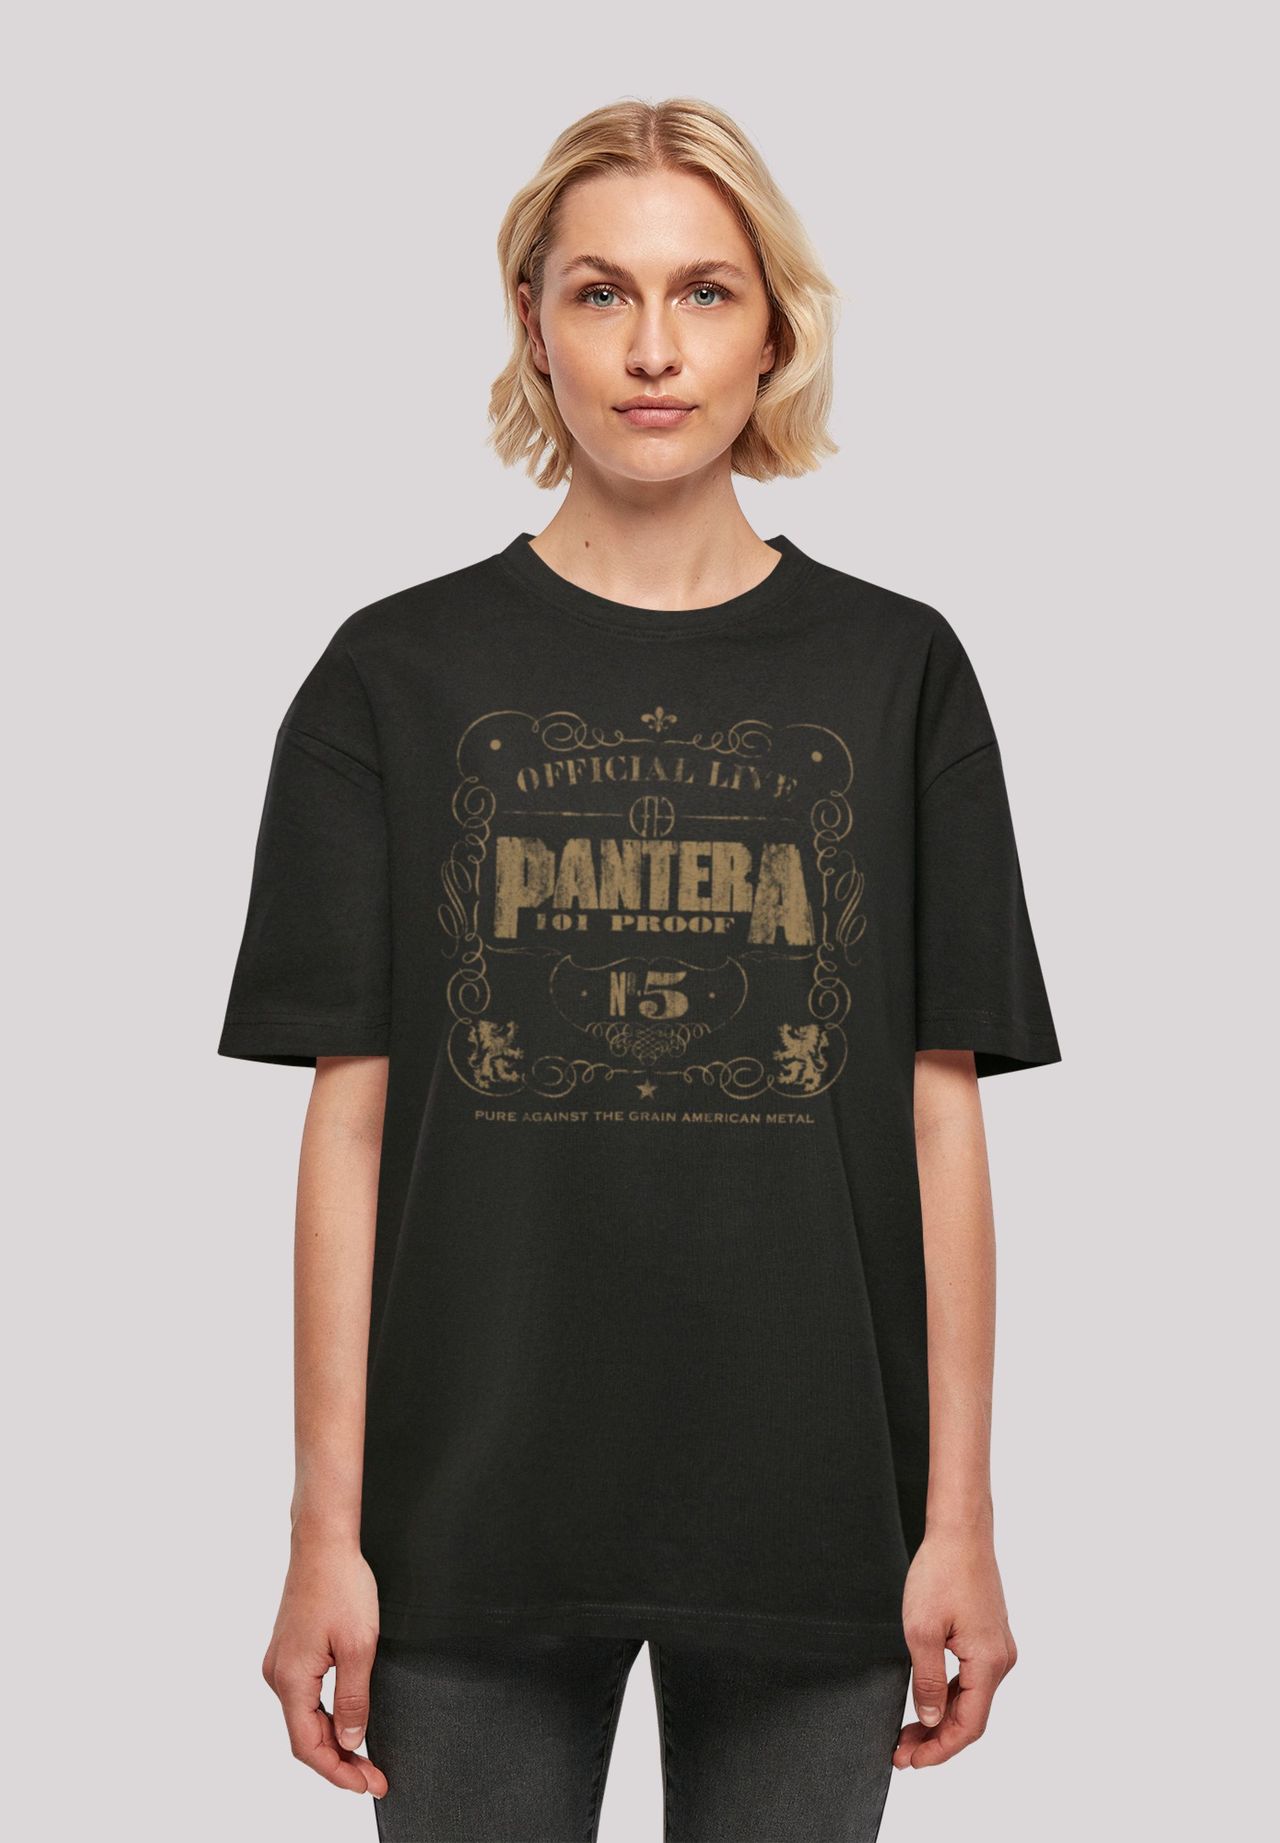 F4NT4STIC | Oversized GALERIA Pantera 101 Black Band Boyfriend T-Shirt Proof Metal